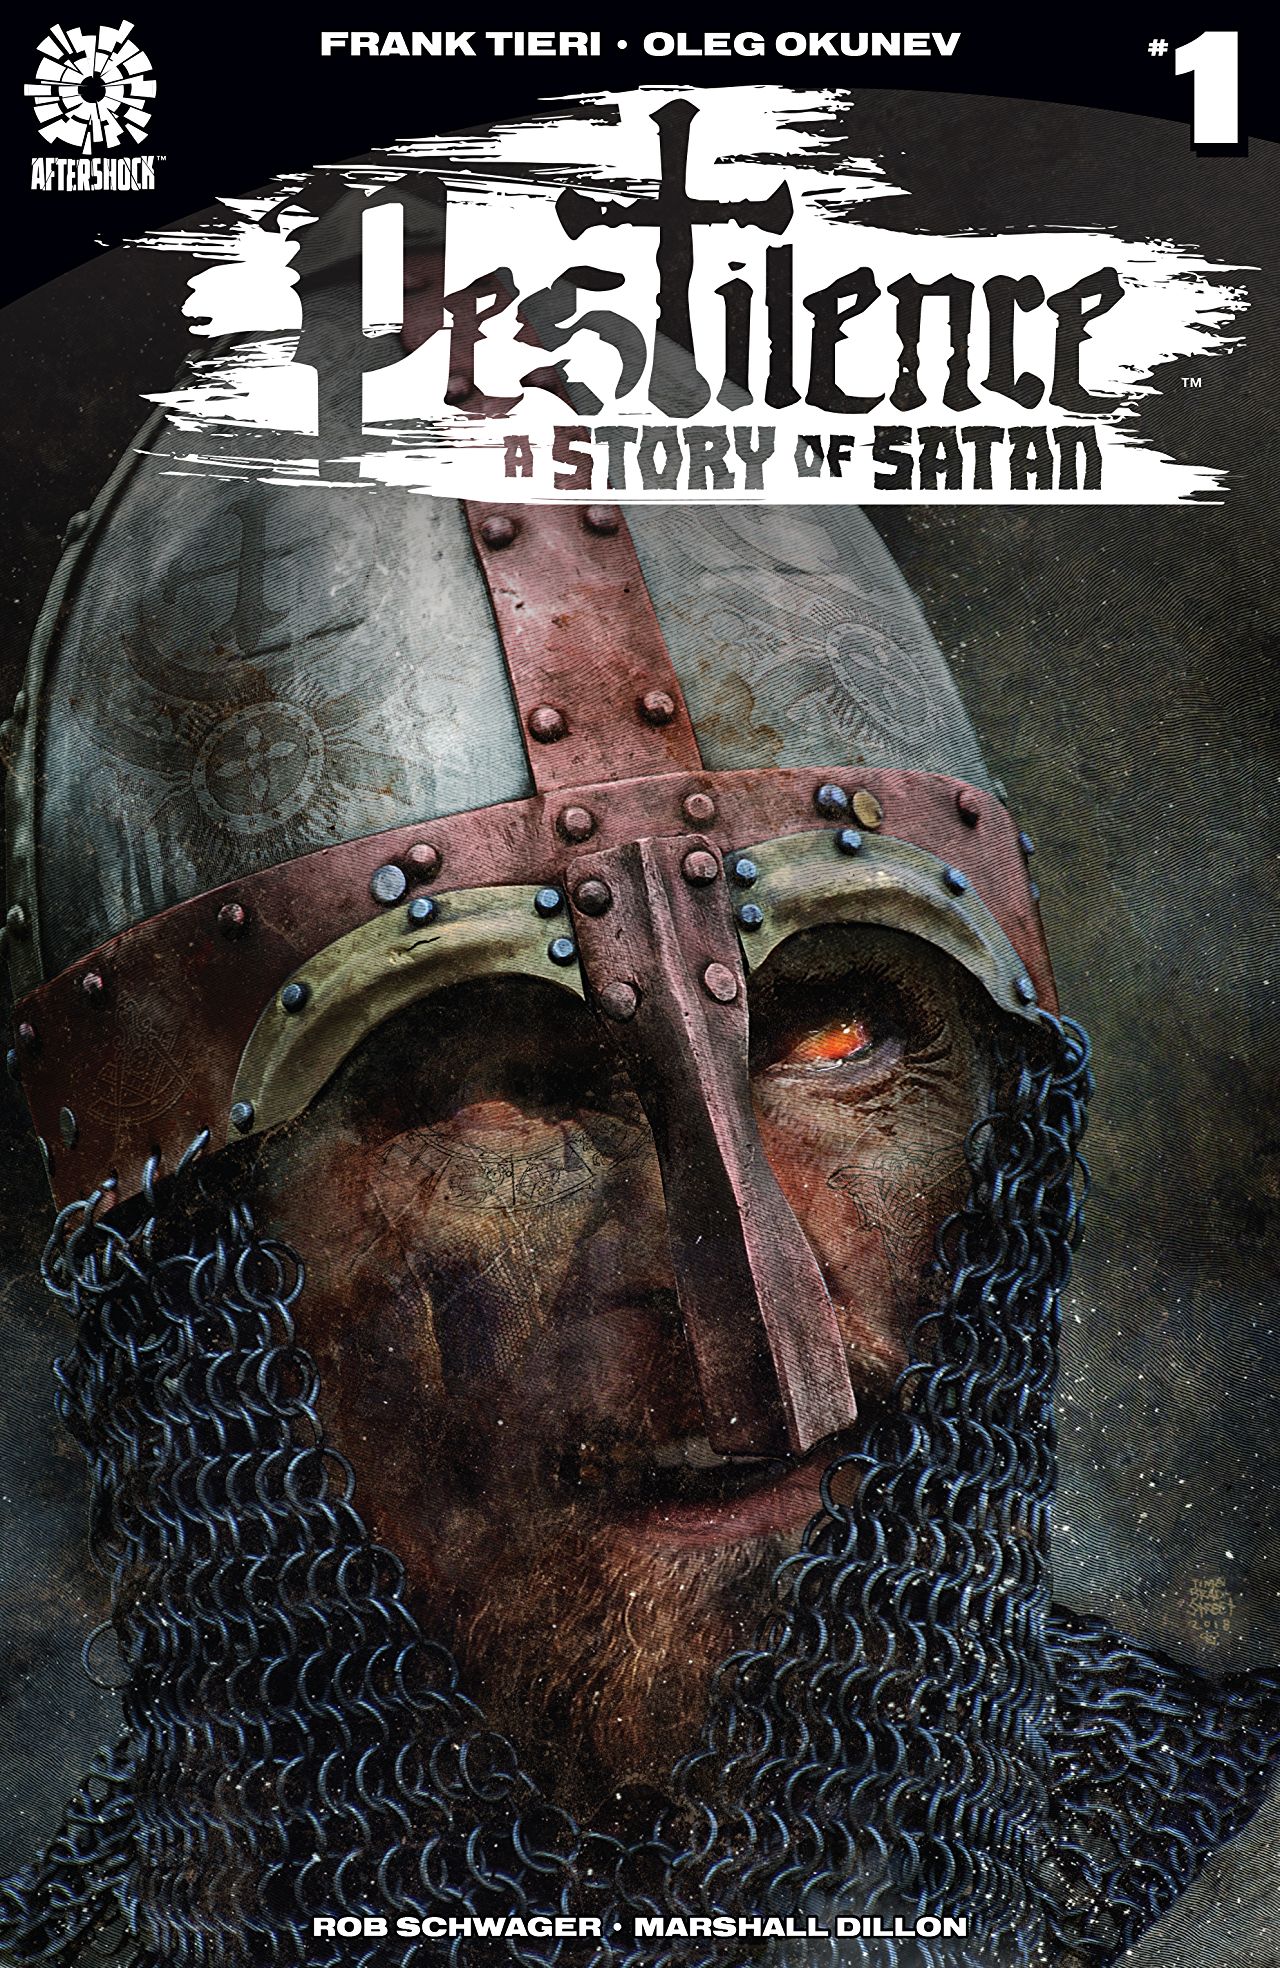 Pestilence: Story of Satan #1 Review